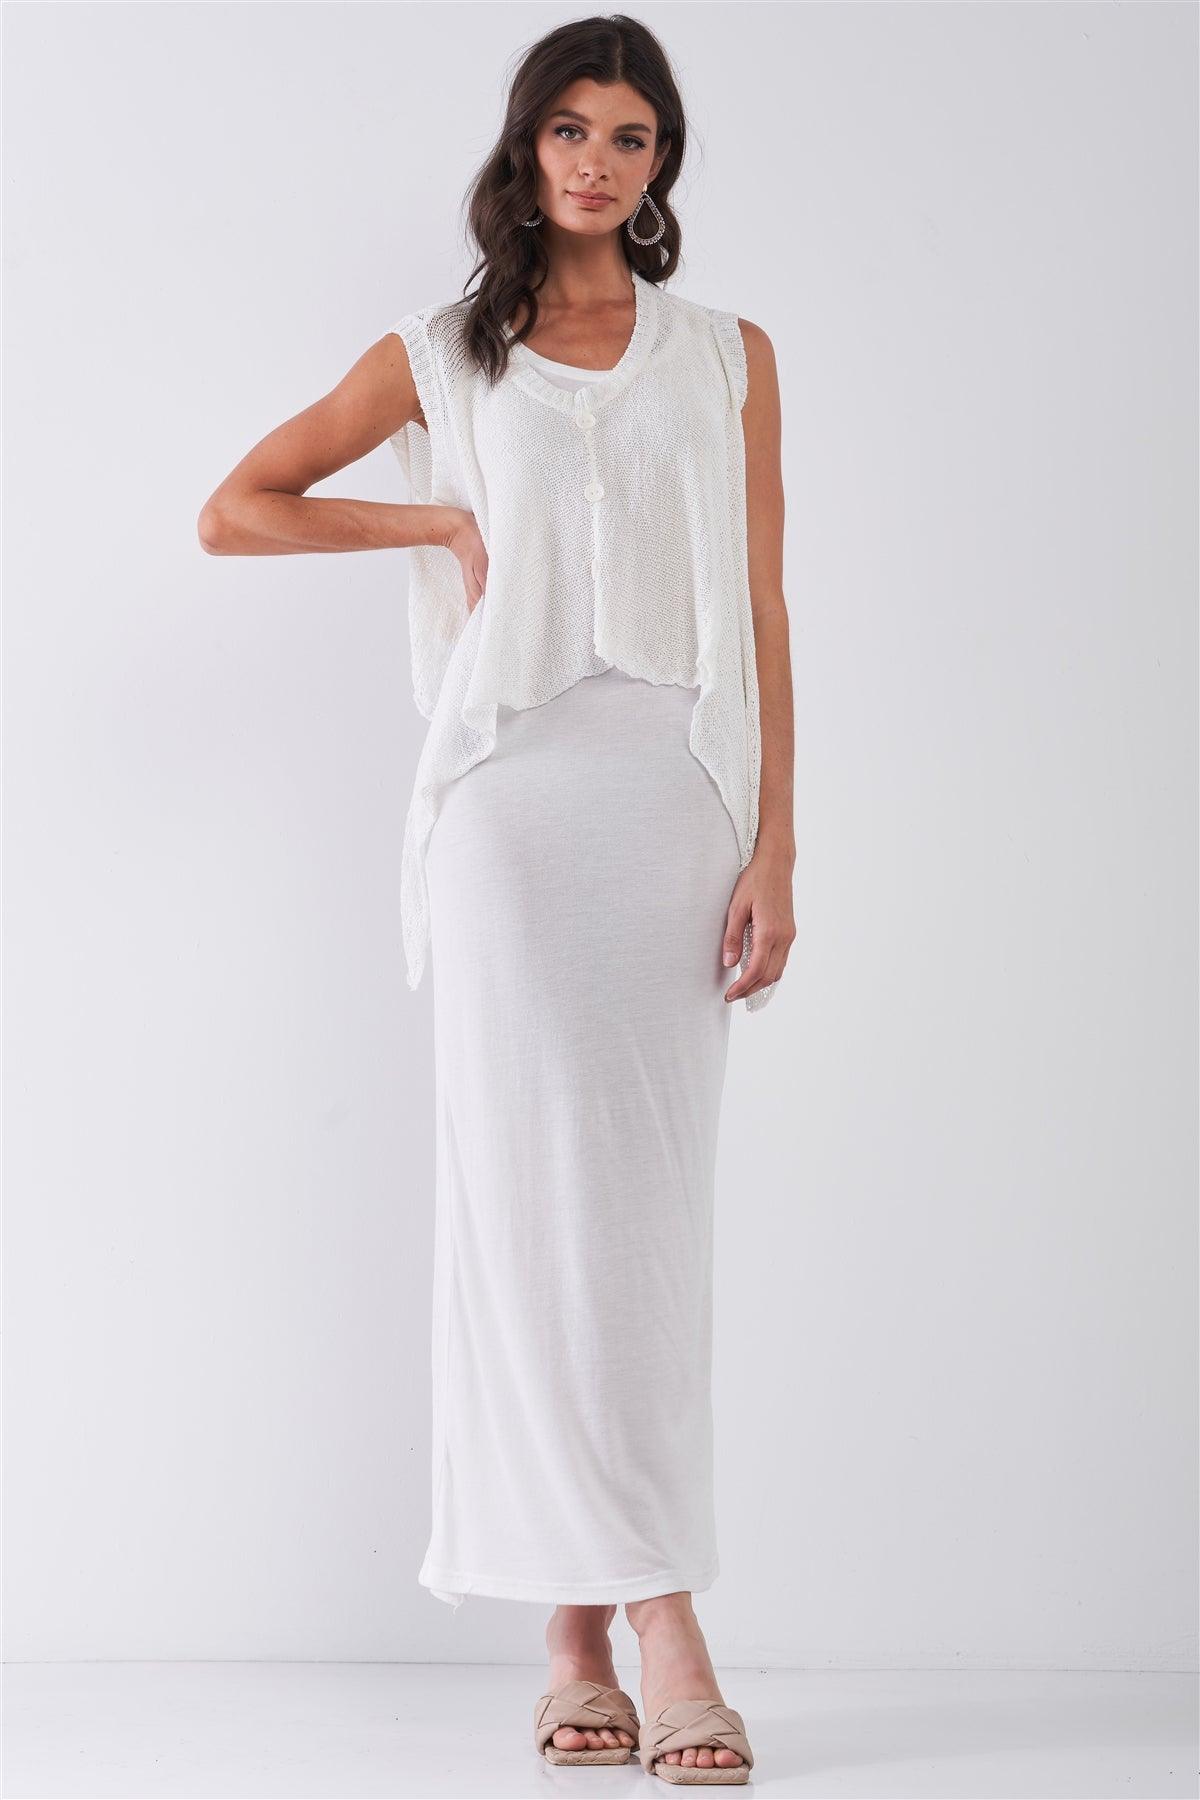 Boho White Maxi Dress With Crochet Sleeveless Poncho